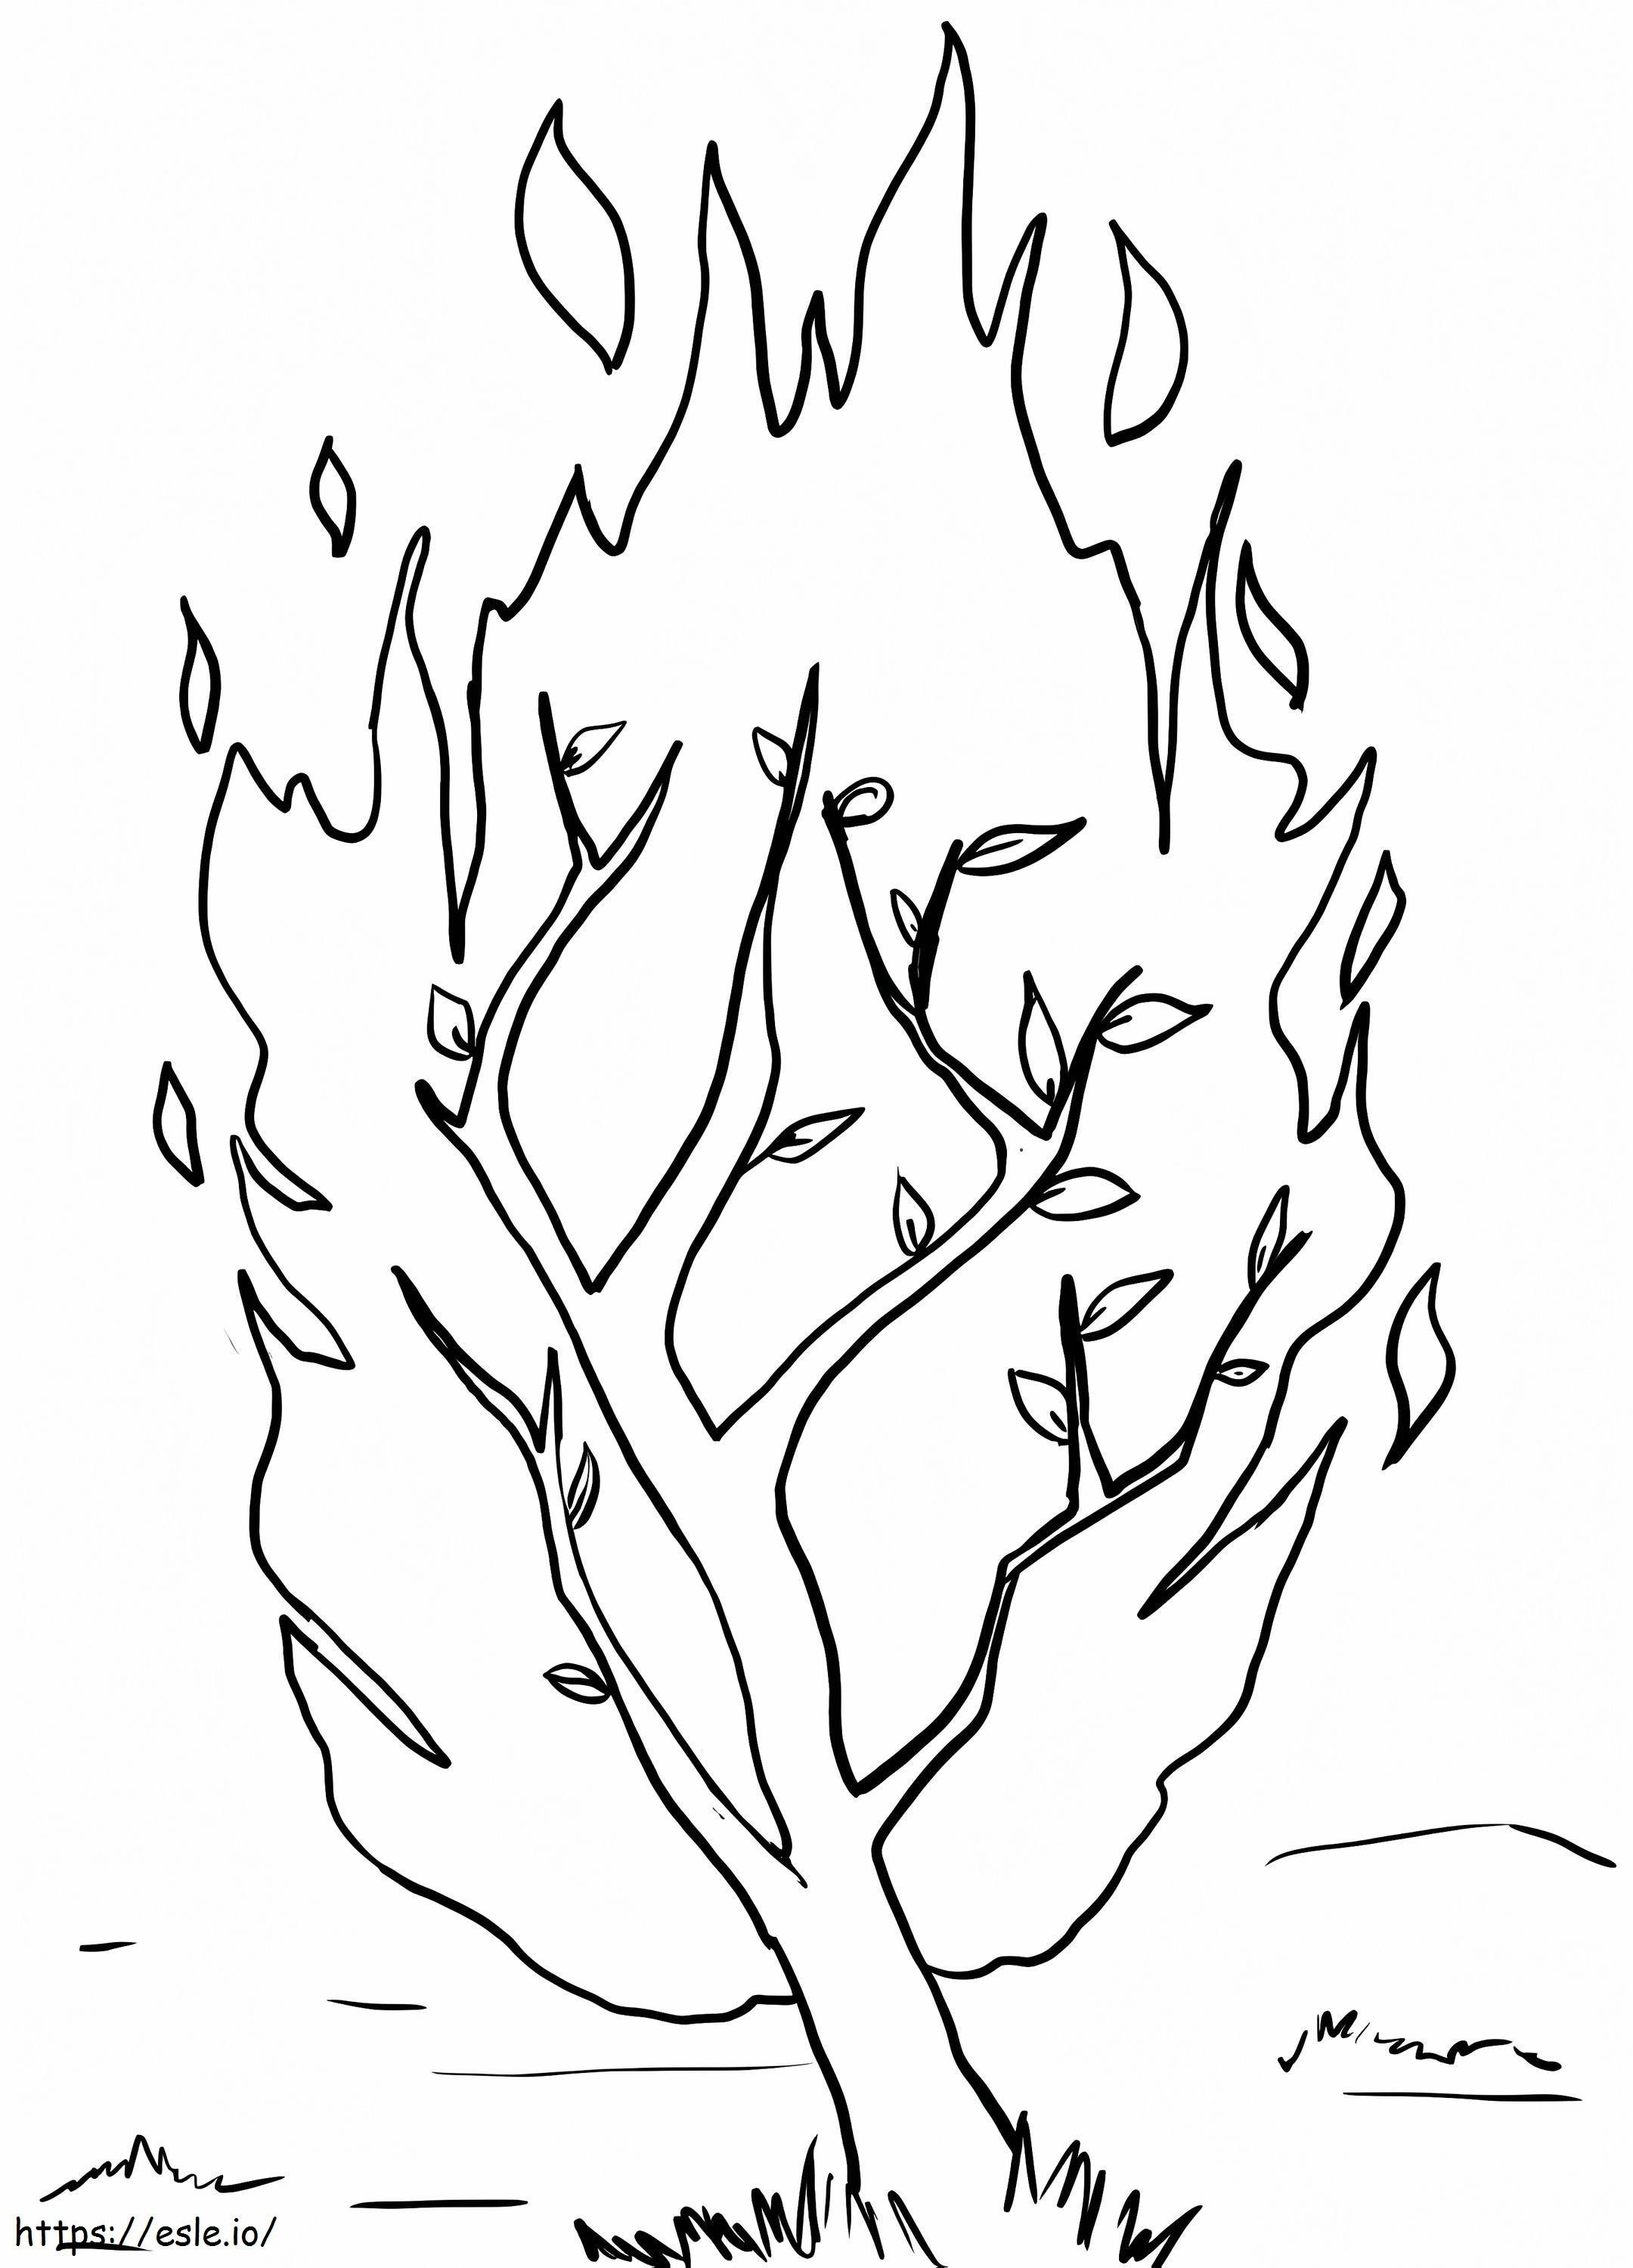 Burning Bush 11 coloring page